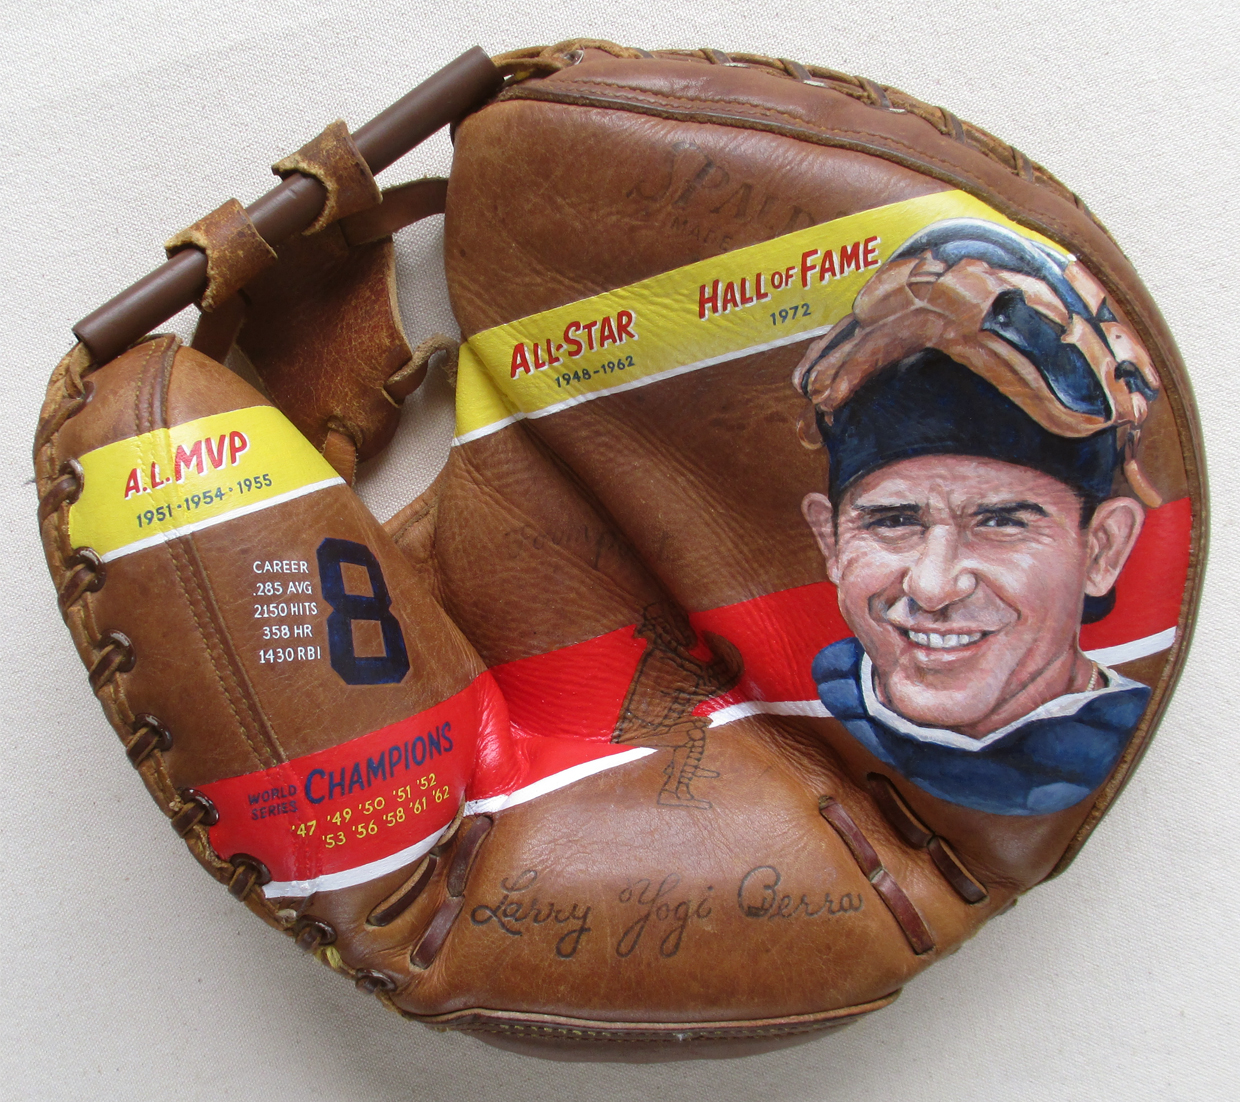 Sean Kane Baseball Art - Painted Gloves